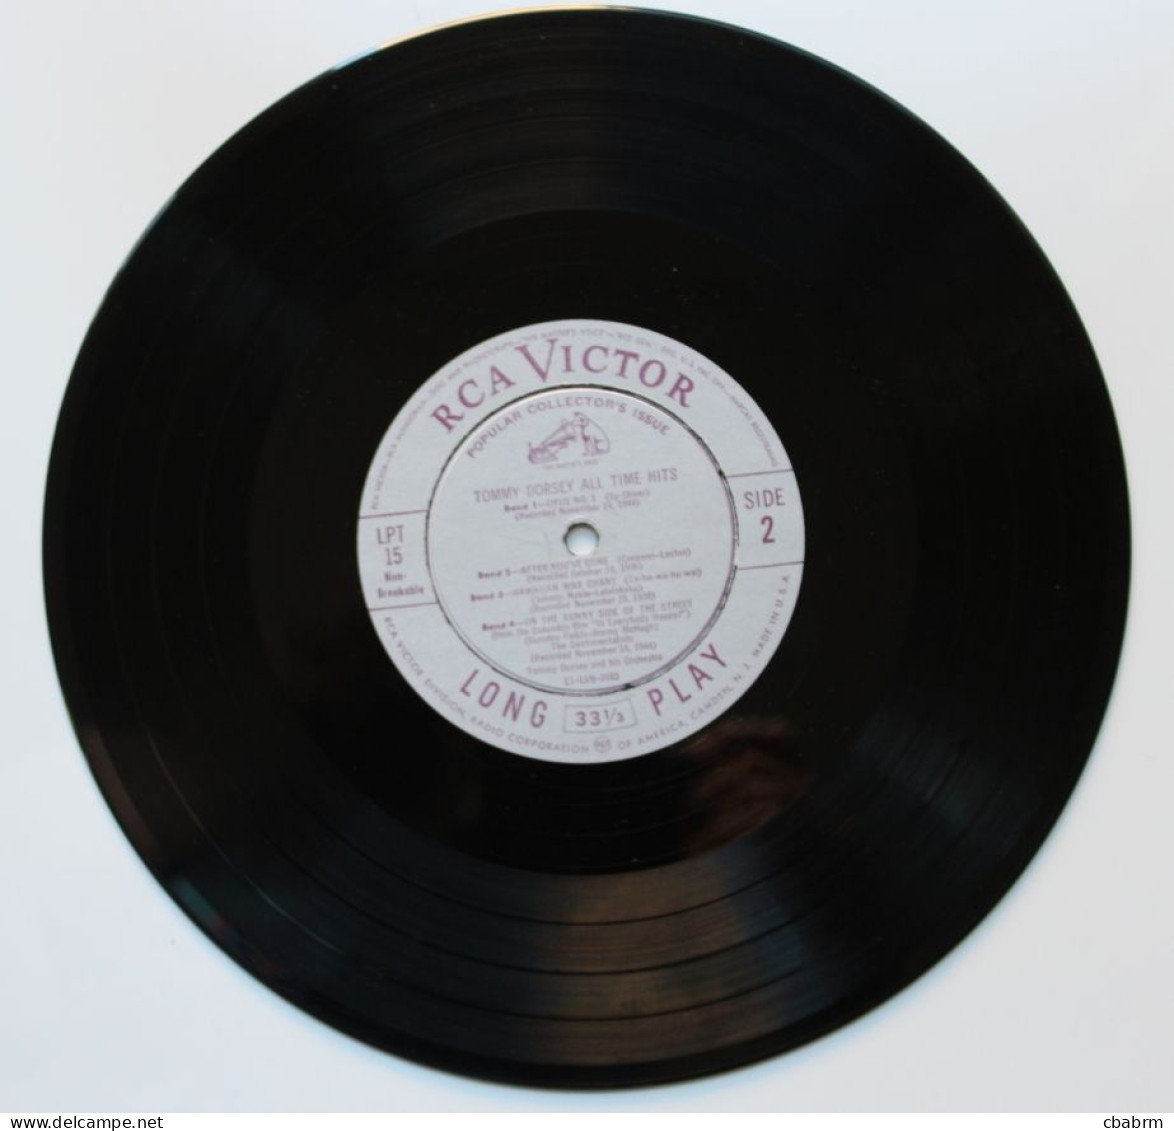 LP 33 TOURS 25 Cm TOMMY DORCEY ALL TIME HITS 1951 US RCA LPT 15 - Formatos Especiales